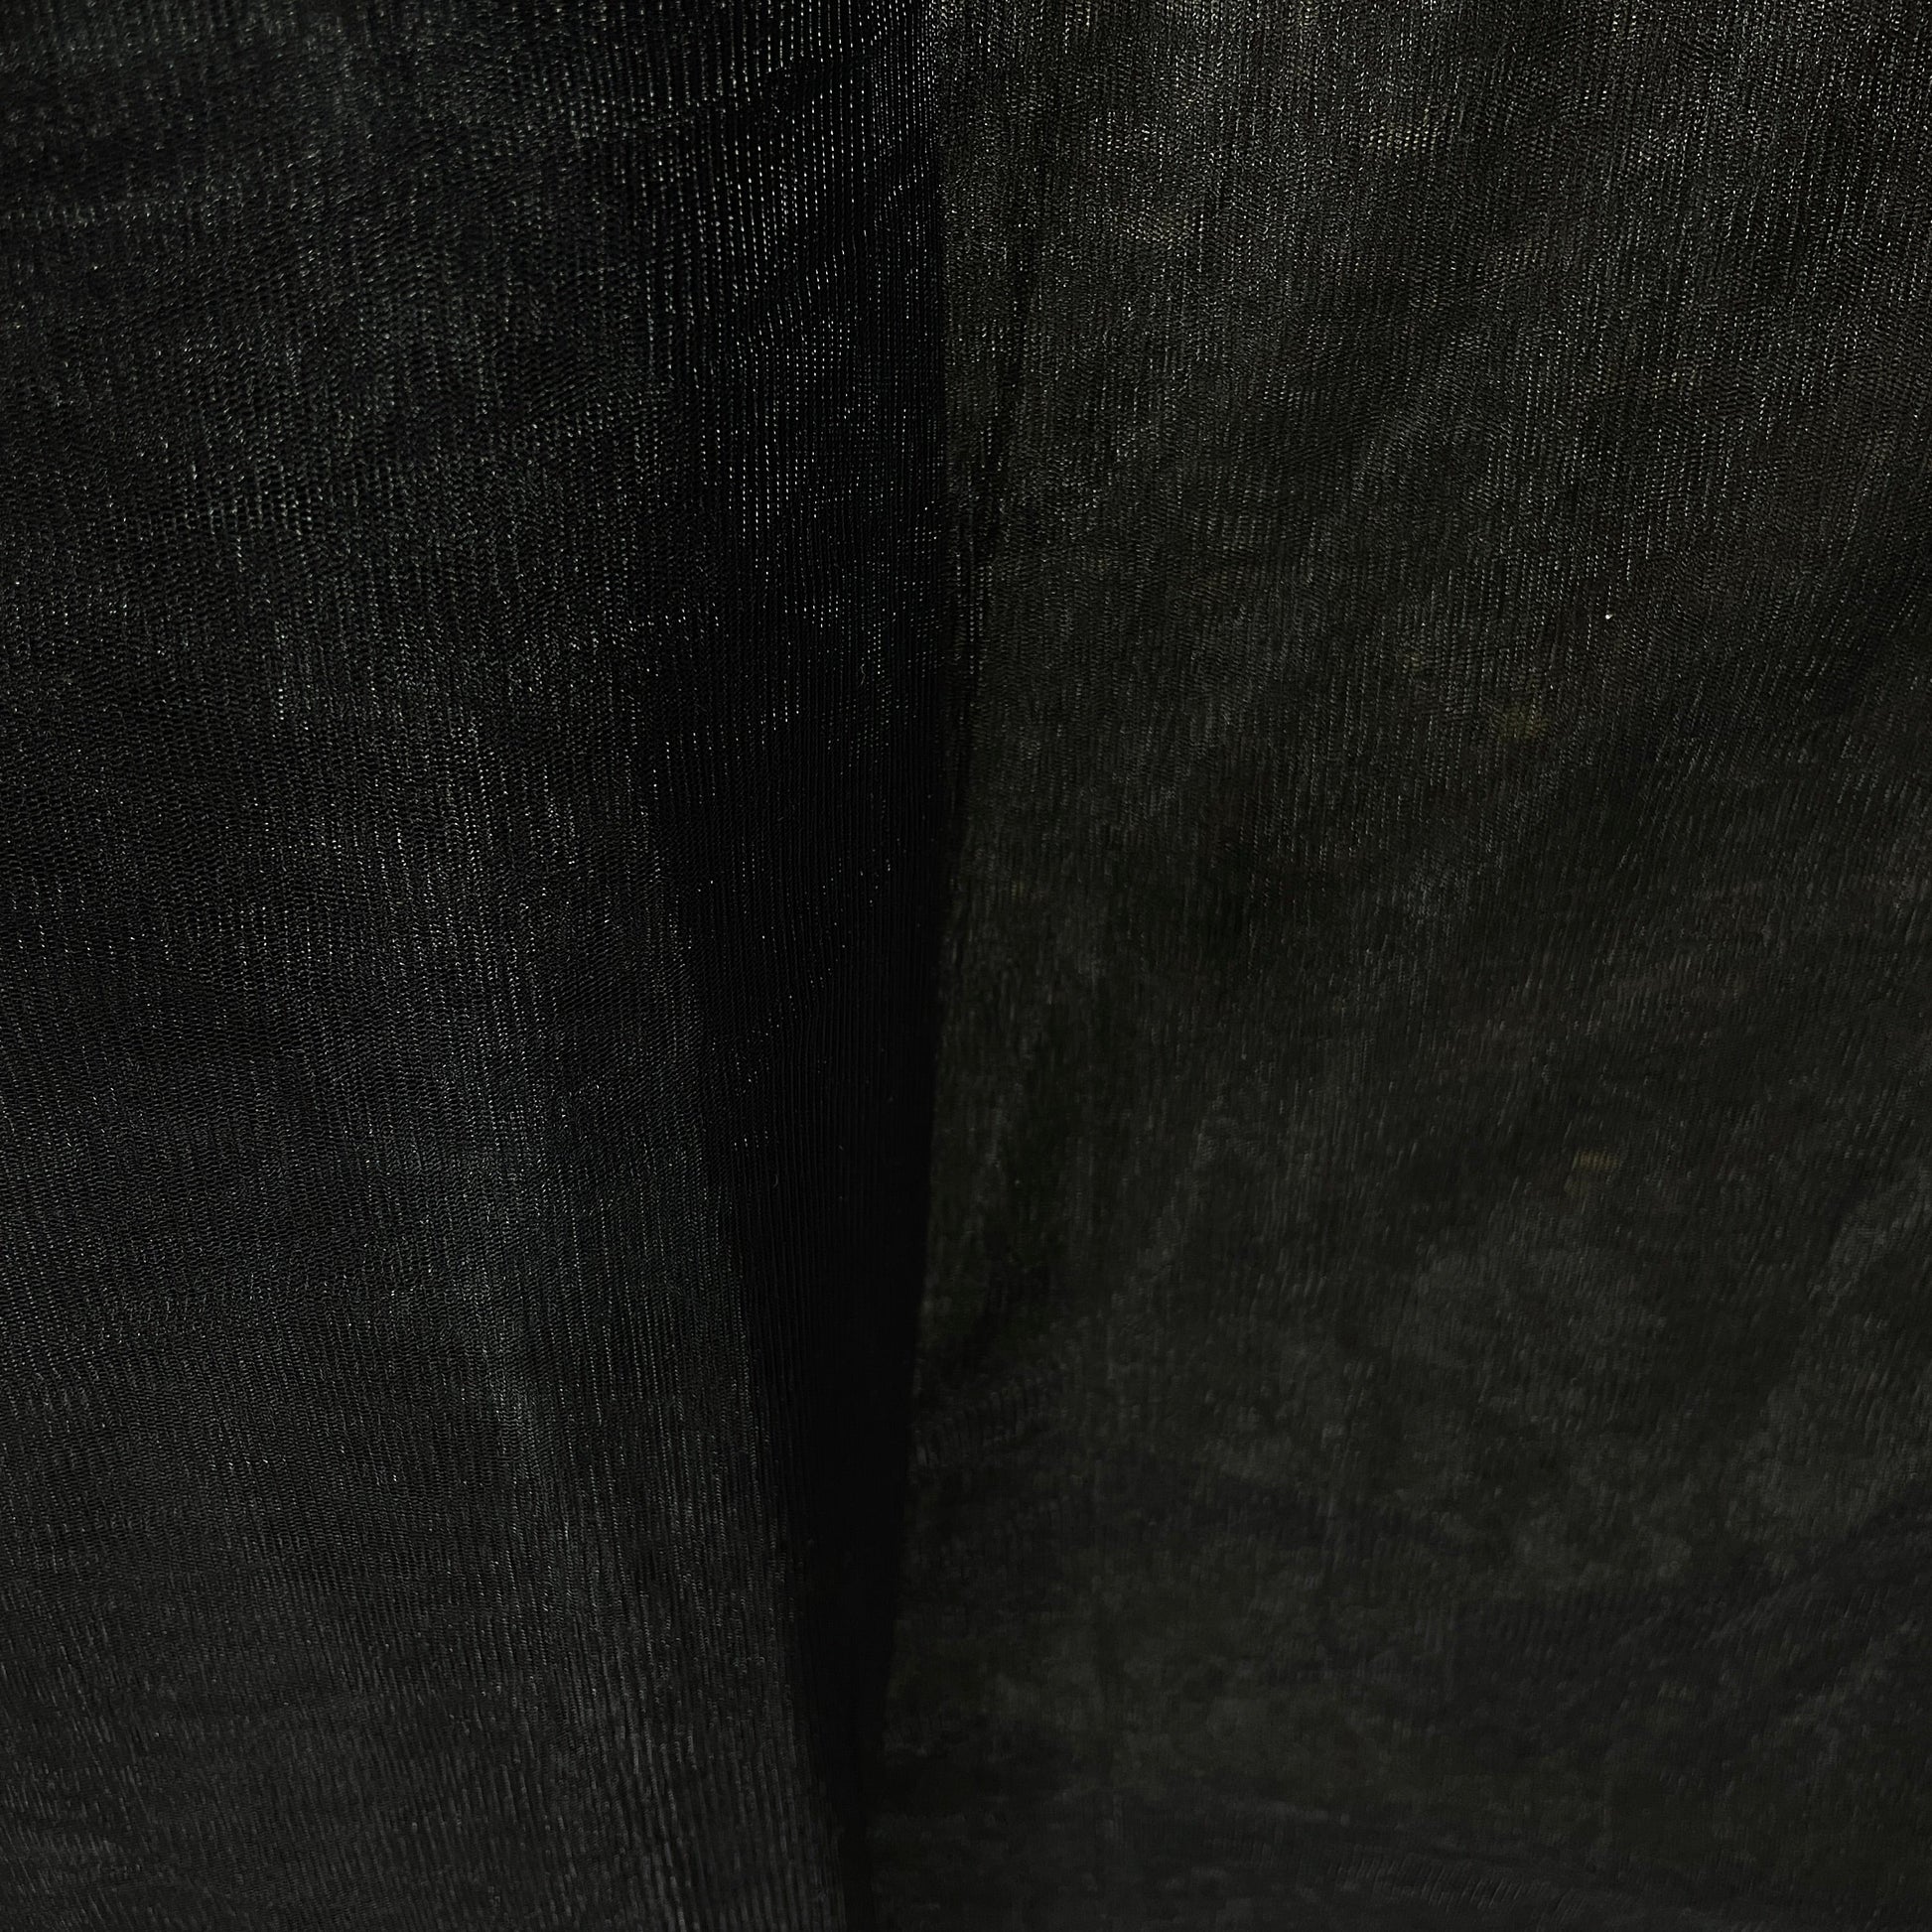 Black Solid Net Fabric - TradeUNO